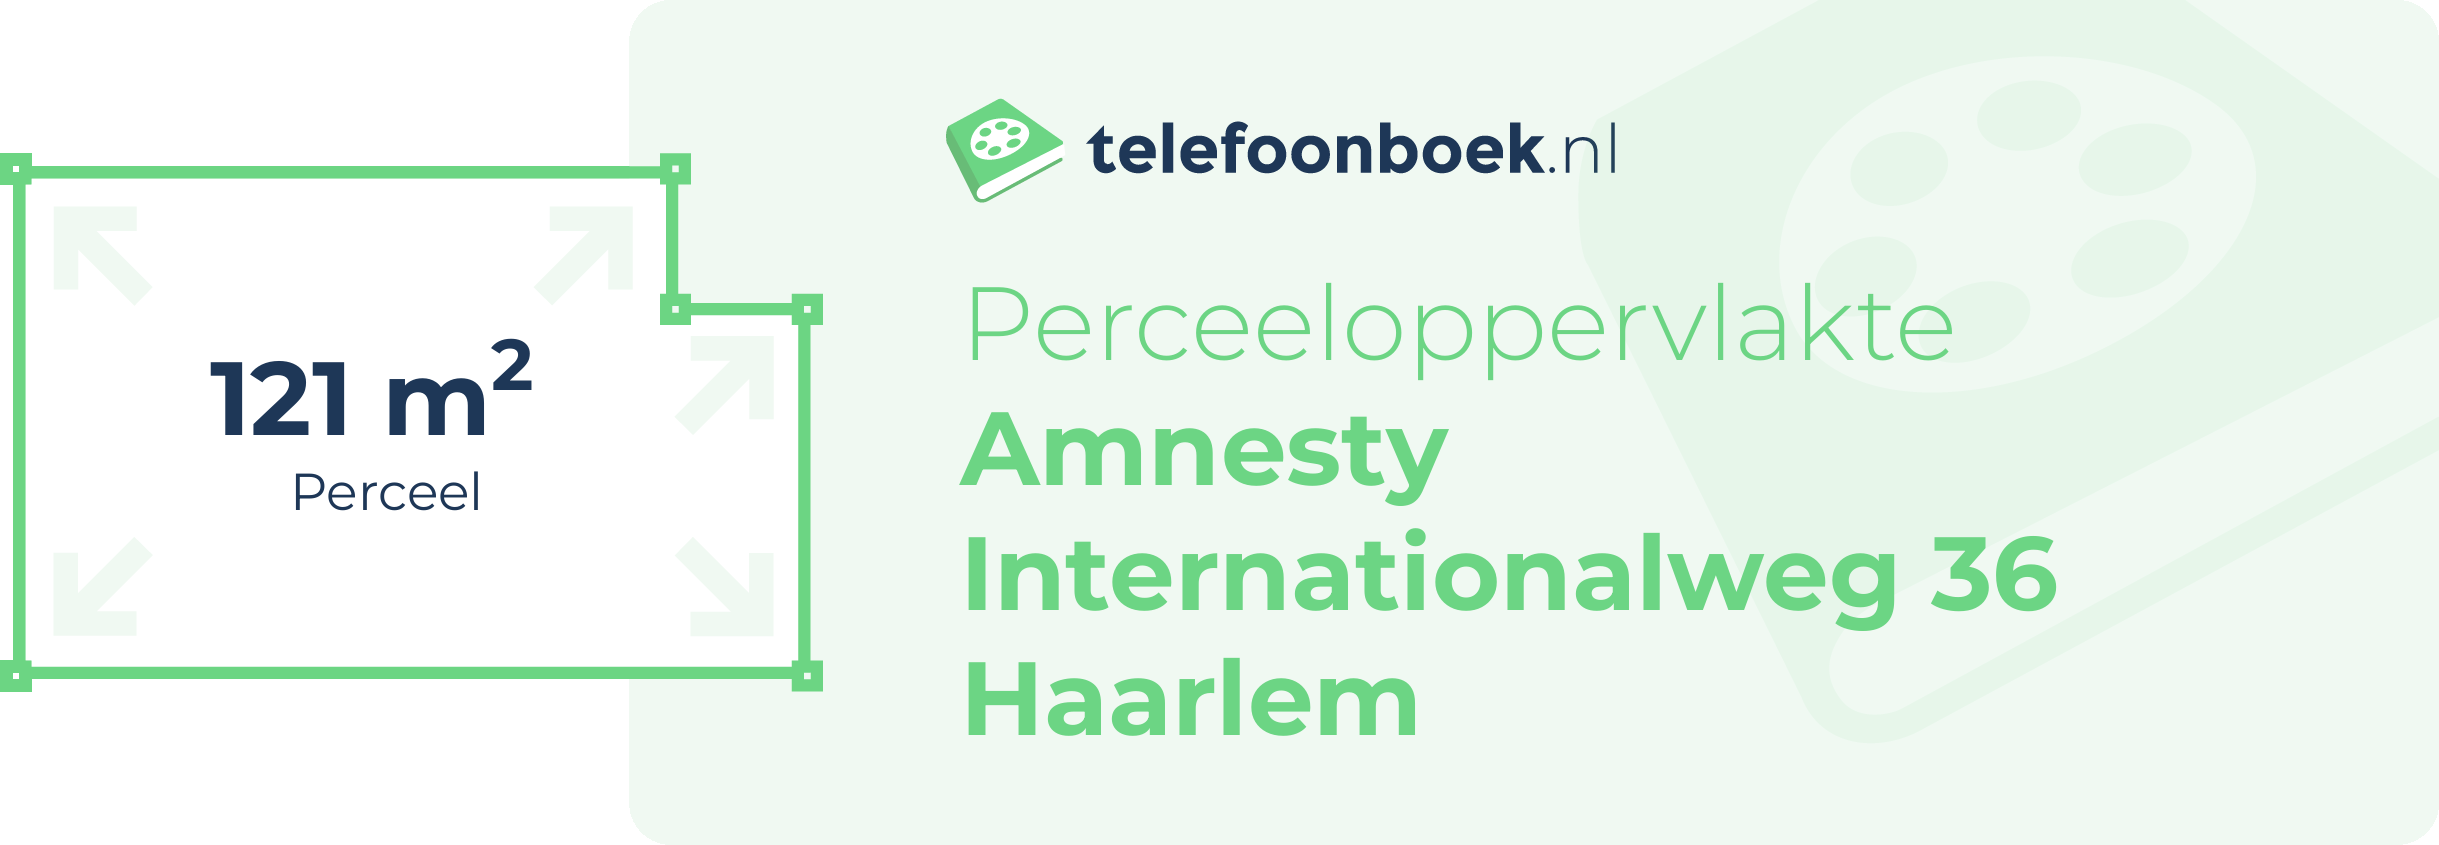 Perceeloppervlakte Amnesty Internationalweg 36 Haarlem